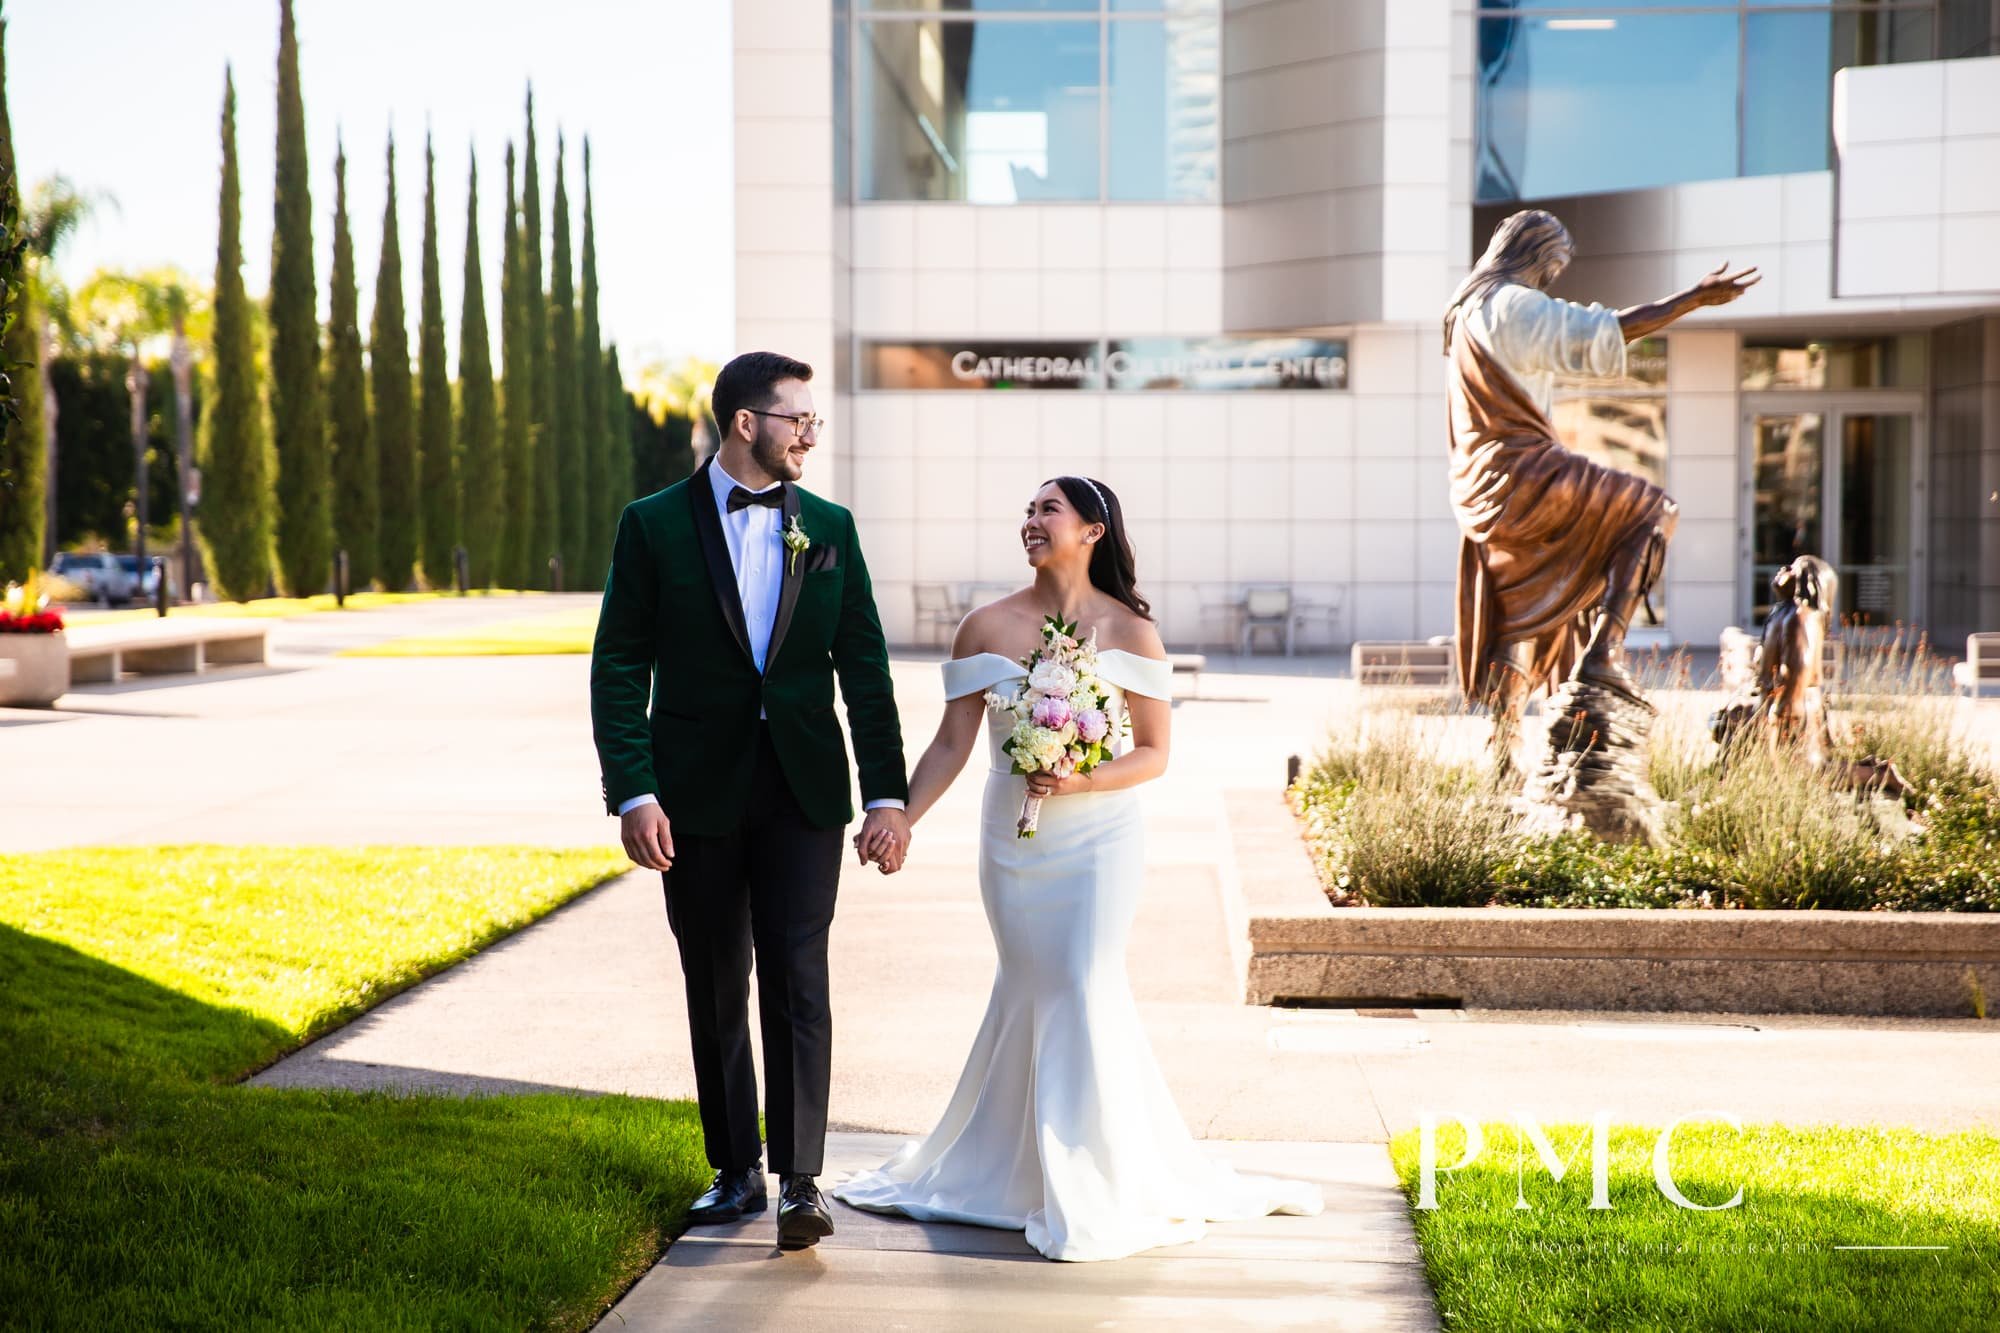 Christ Cathedral and Marriott Irvine Spectrum Wedding - Best Orange County Wedding Photographer-49.jpg